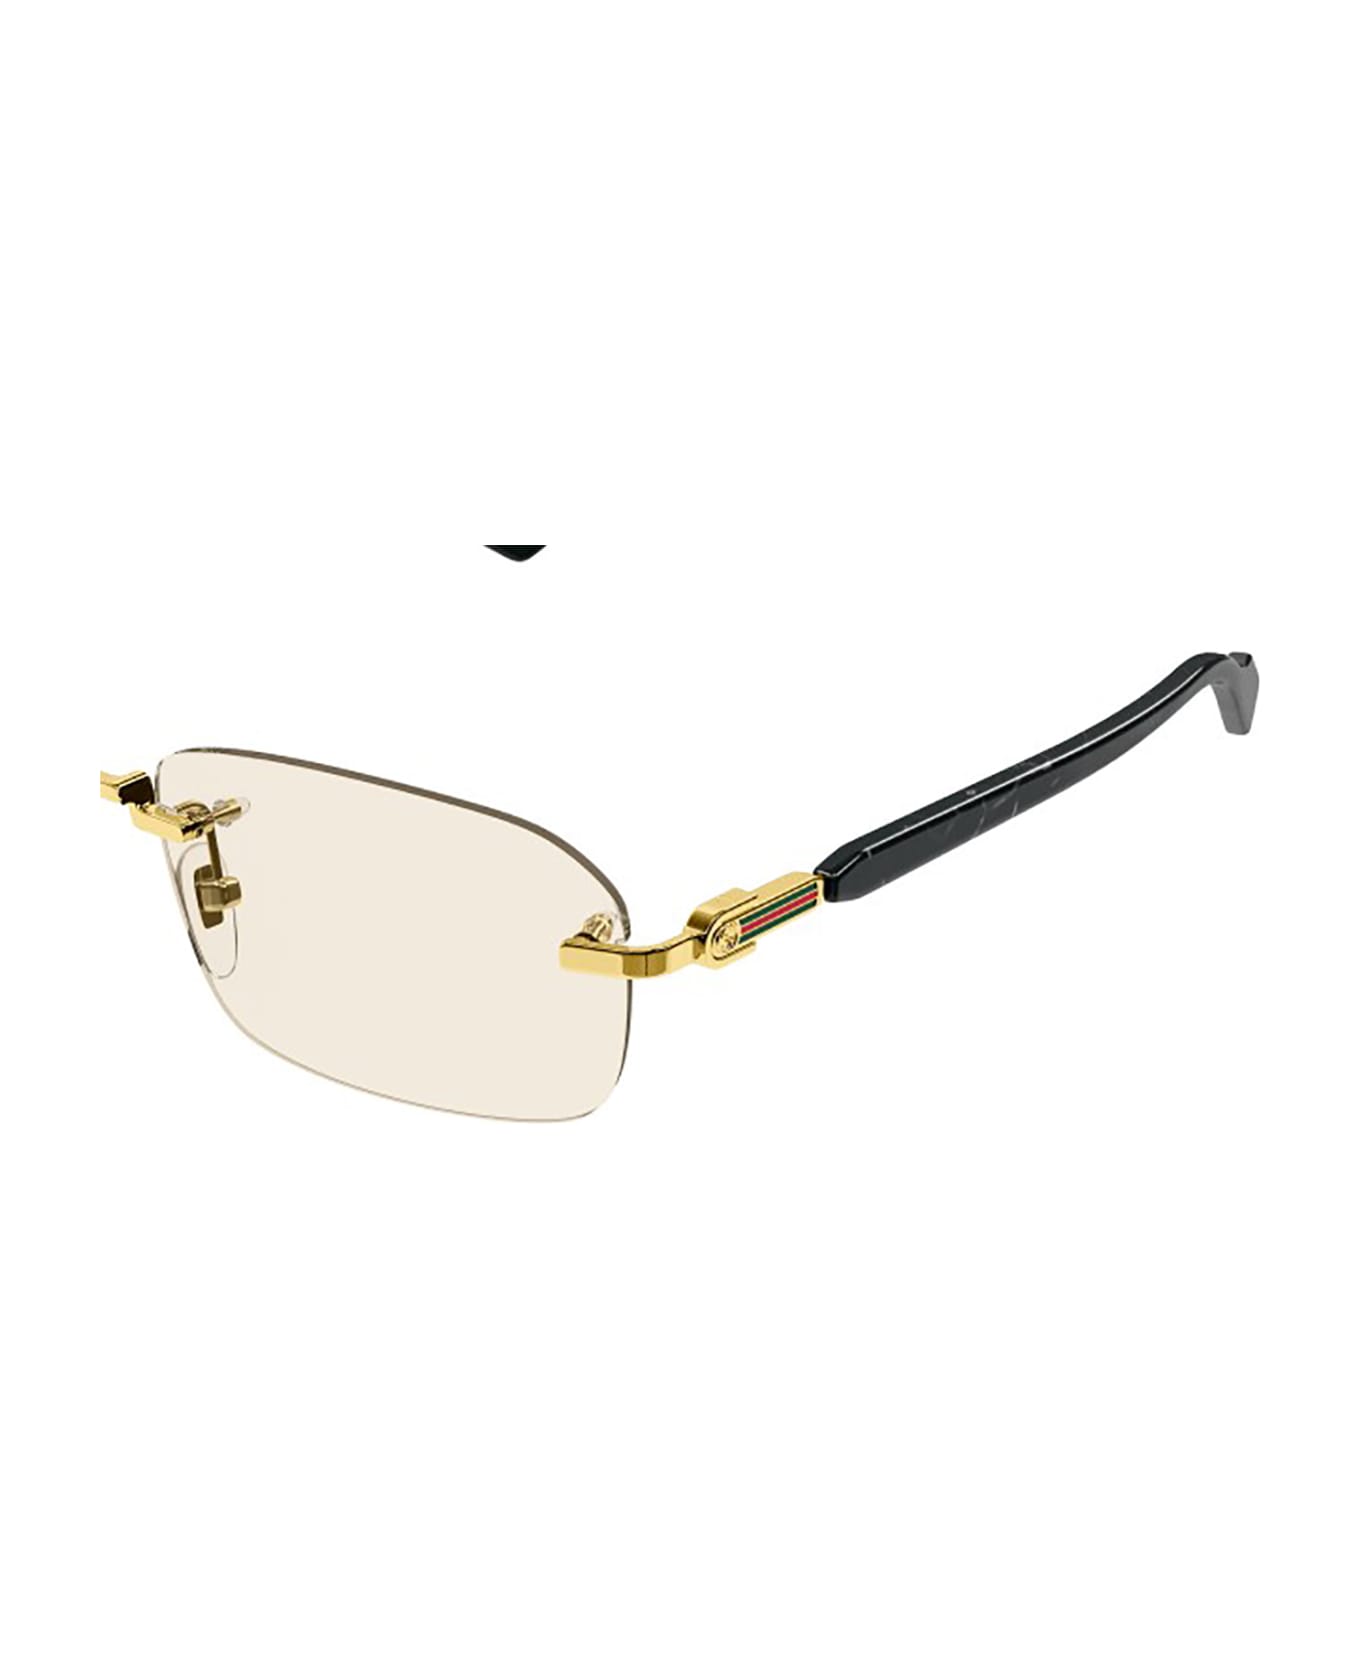 Gucci Eyewear Gg1221s Sunglasses - 005 gold black yellow サングラス